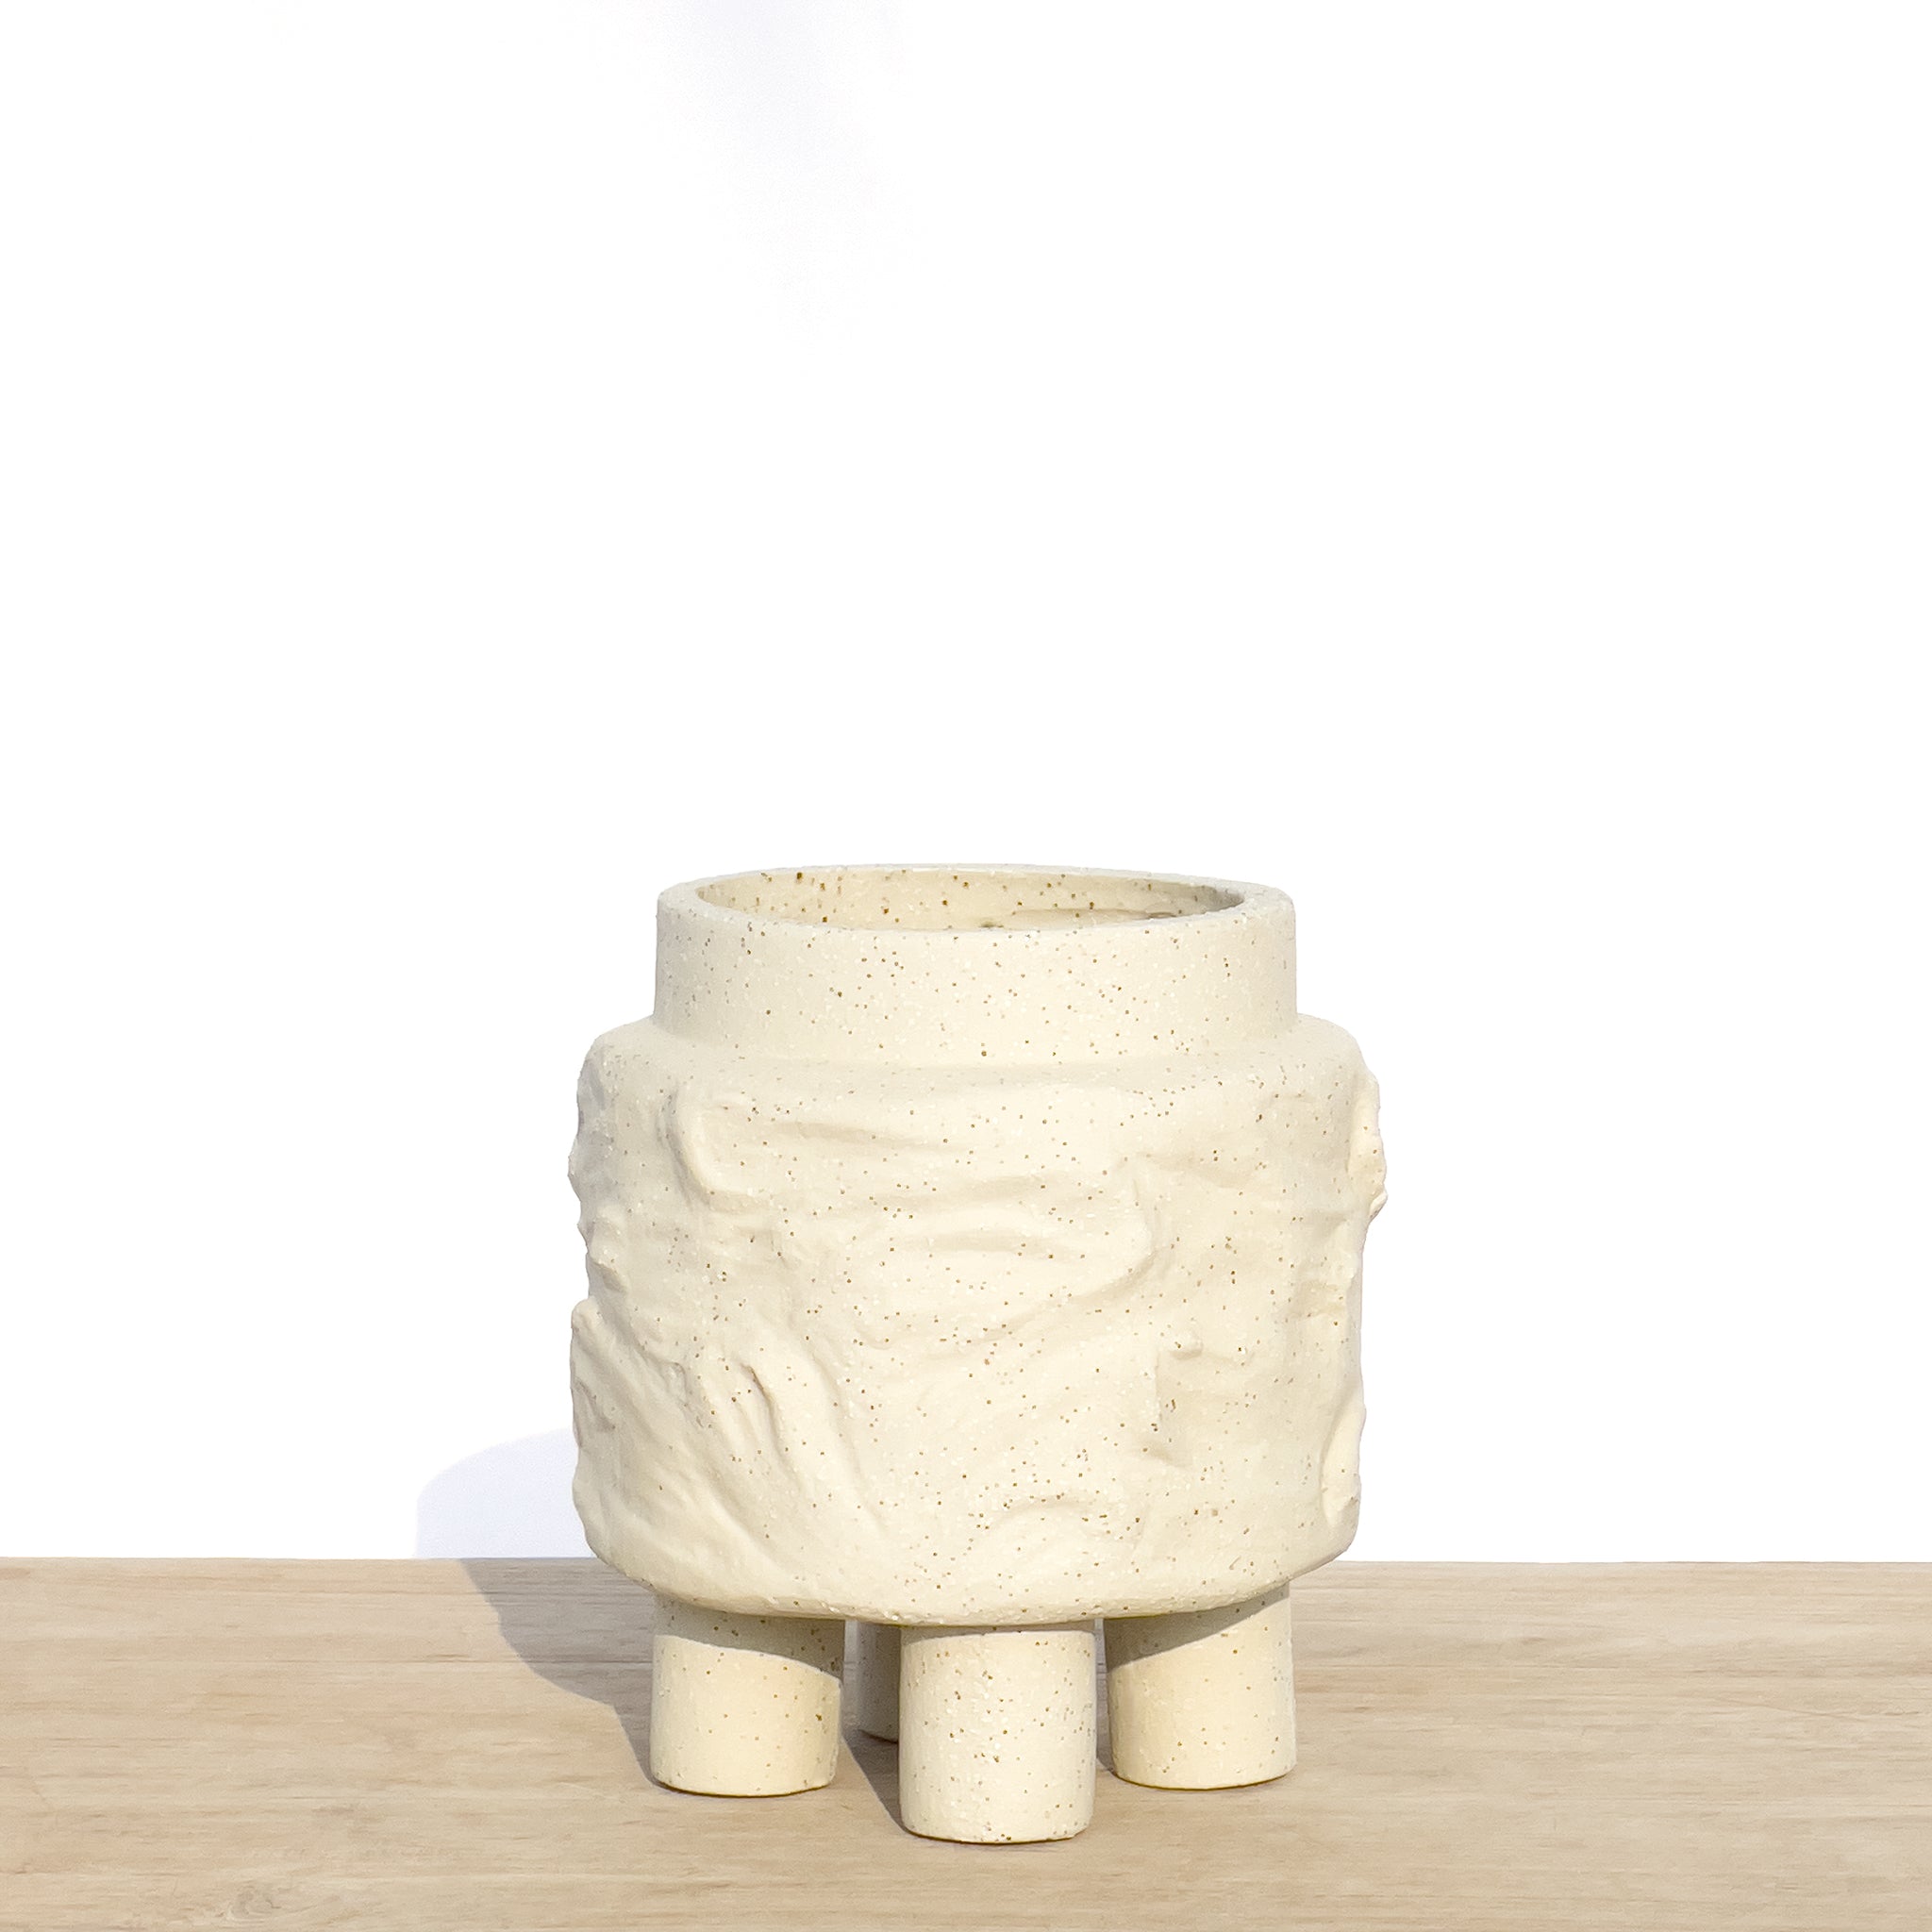 紋理陶瓷花盆 | Textured ceramic planter